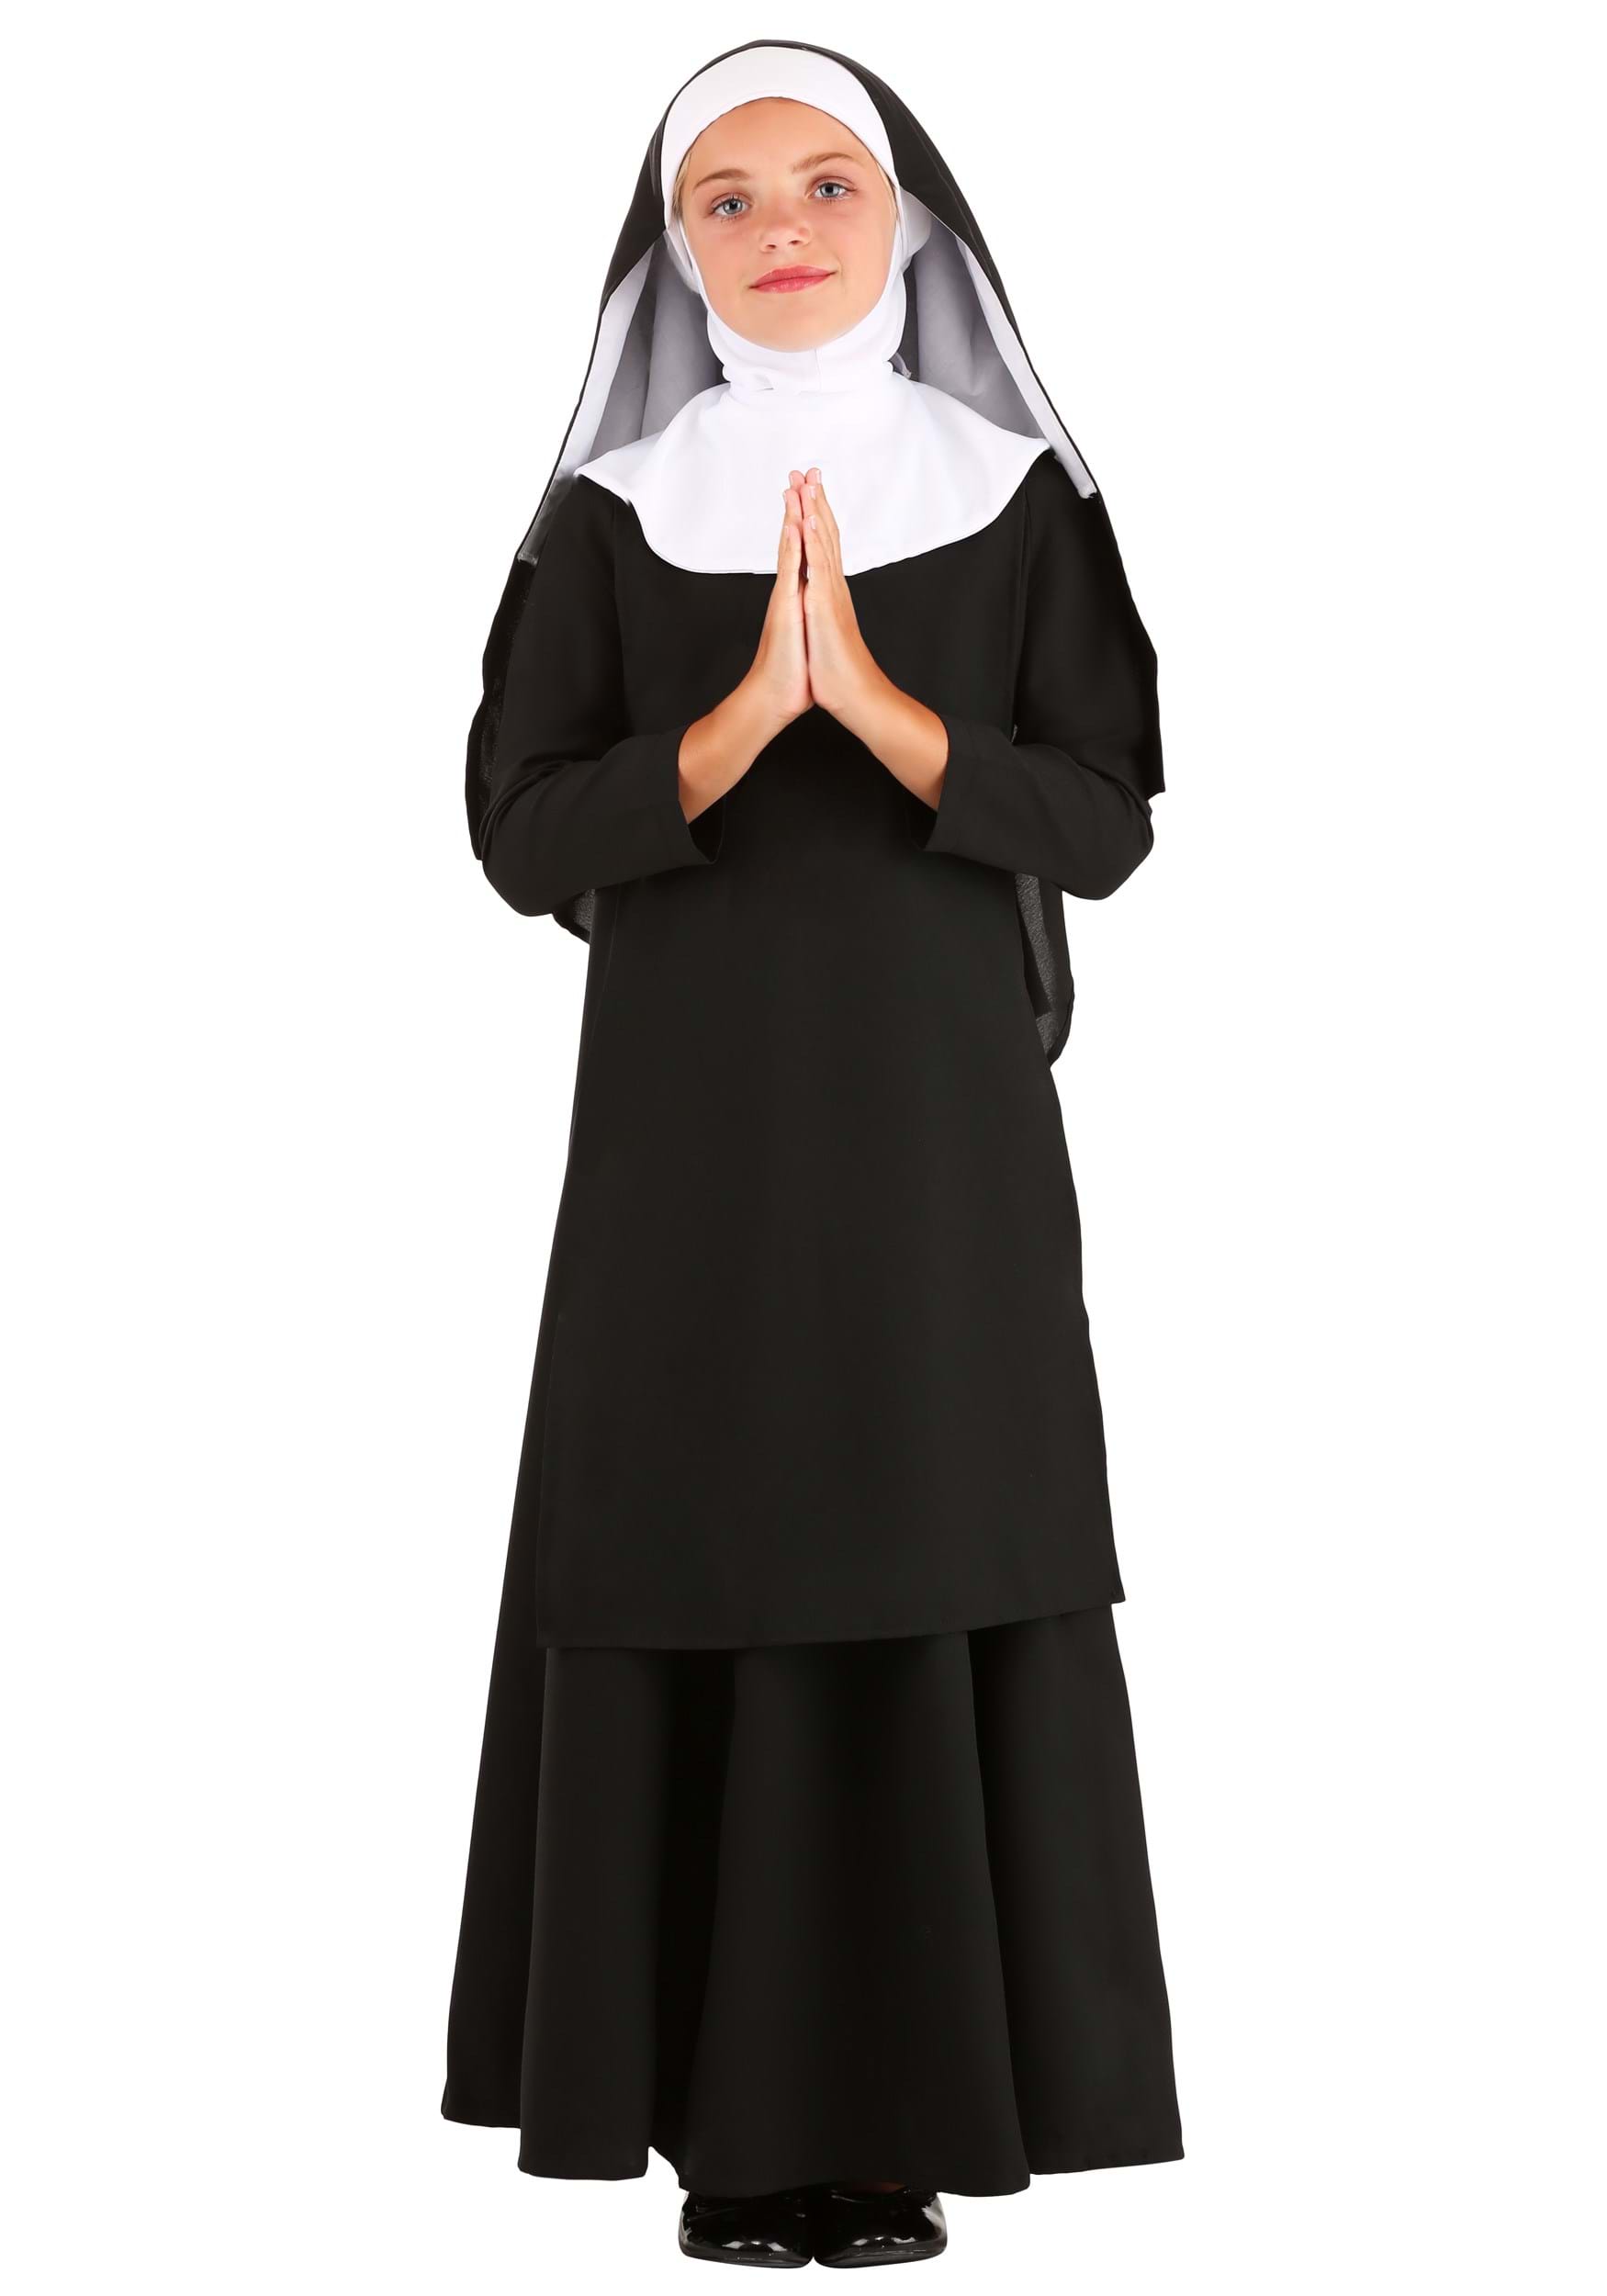 Photos - Fancy Dress Deluxe FUN Costumes  Catholic Nun Kid's Costume Black/White FUN2935CH 